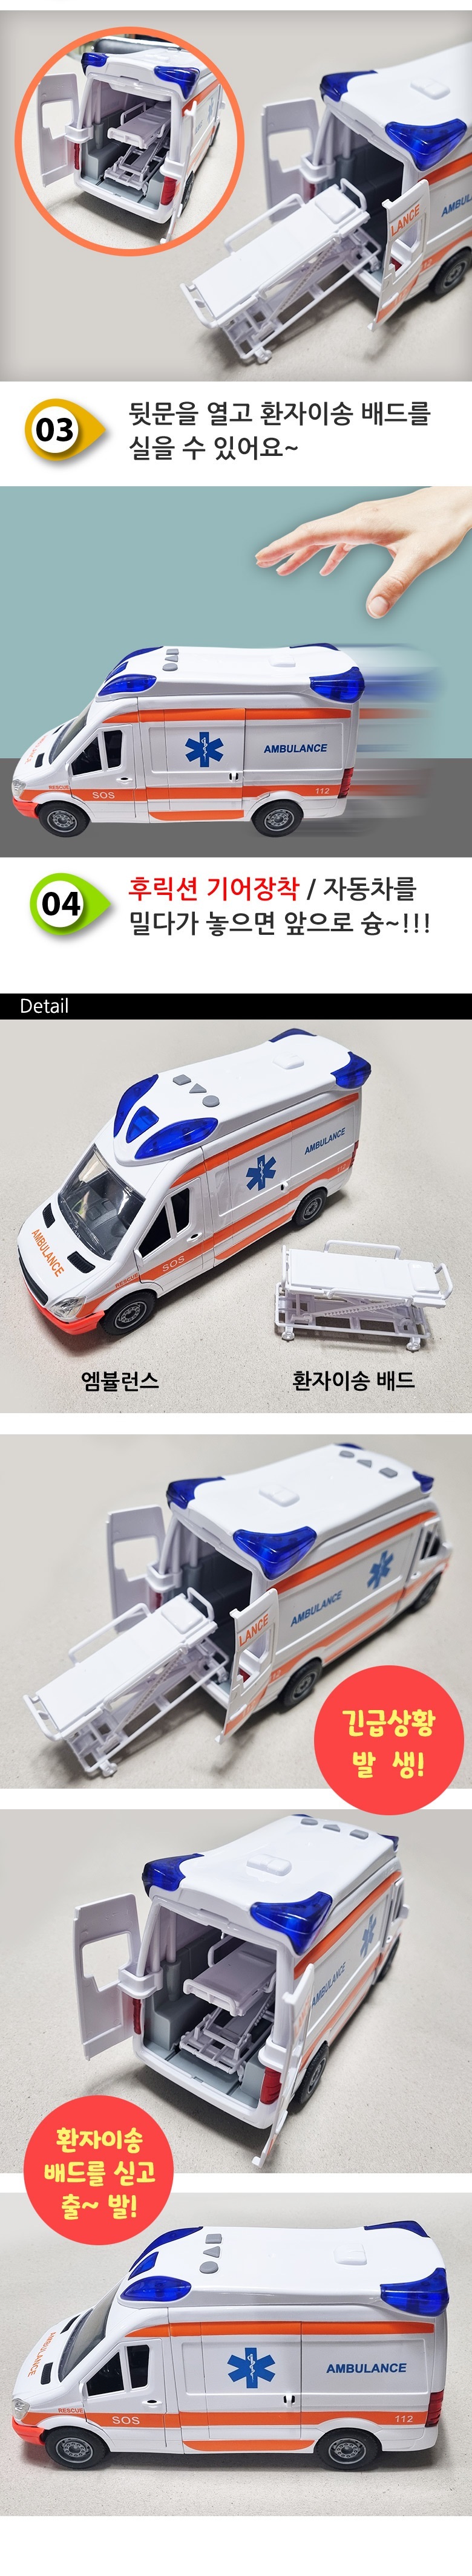 ambulance25000_2.jpg